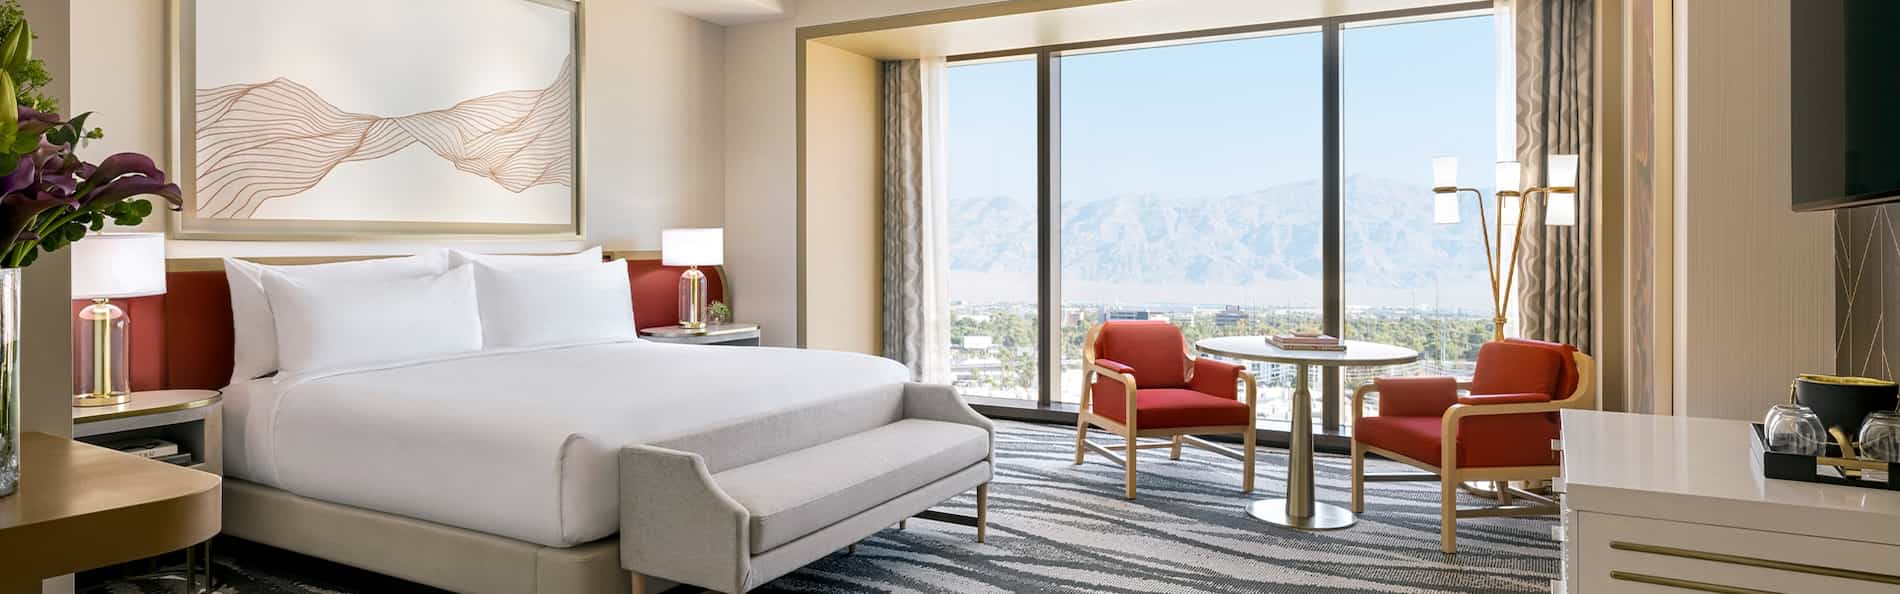 Conrad Las Vegas Room